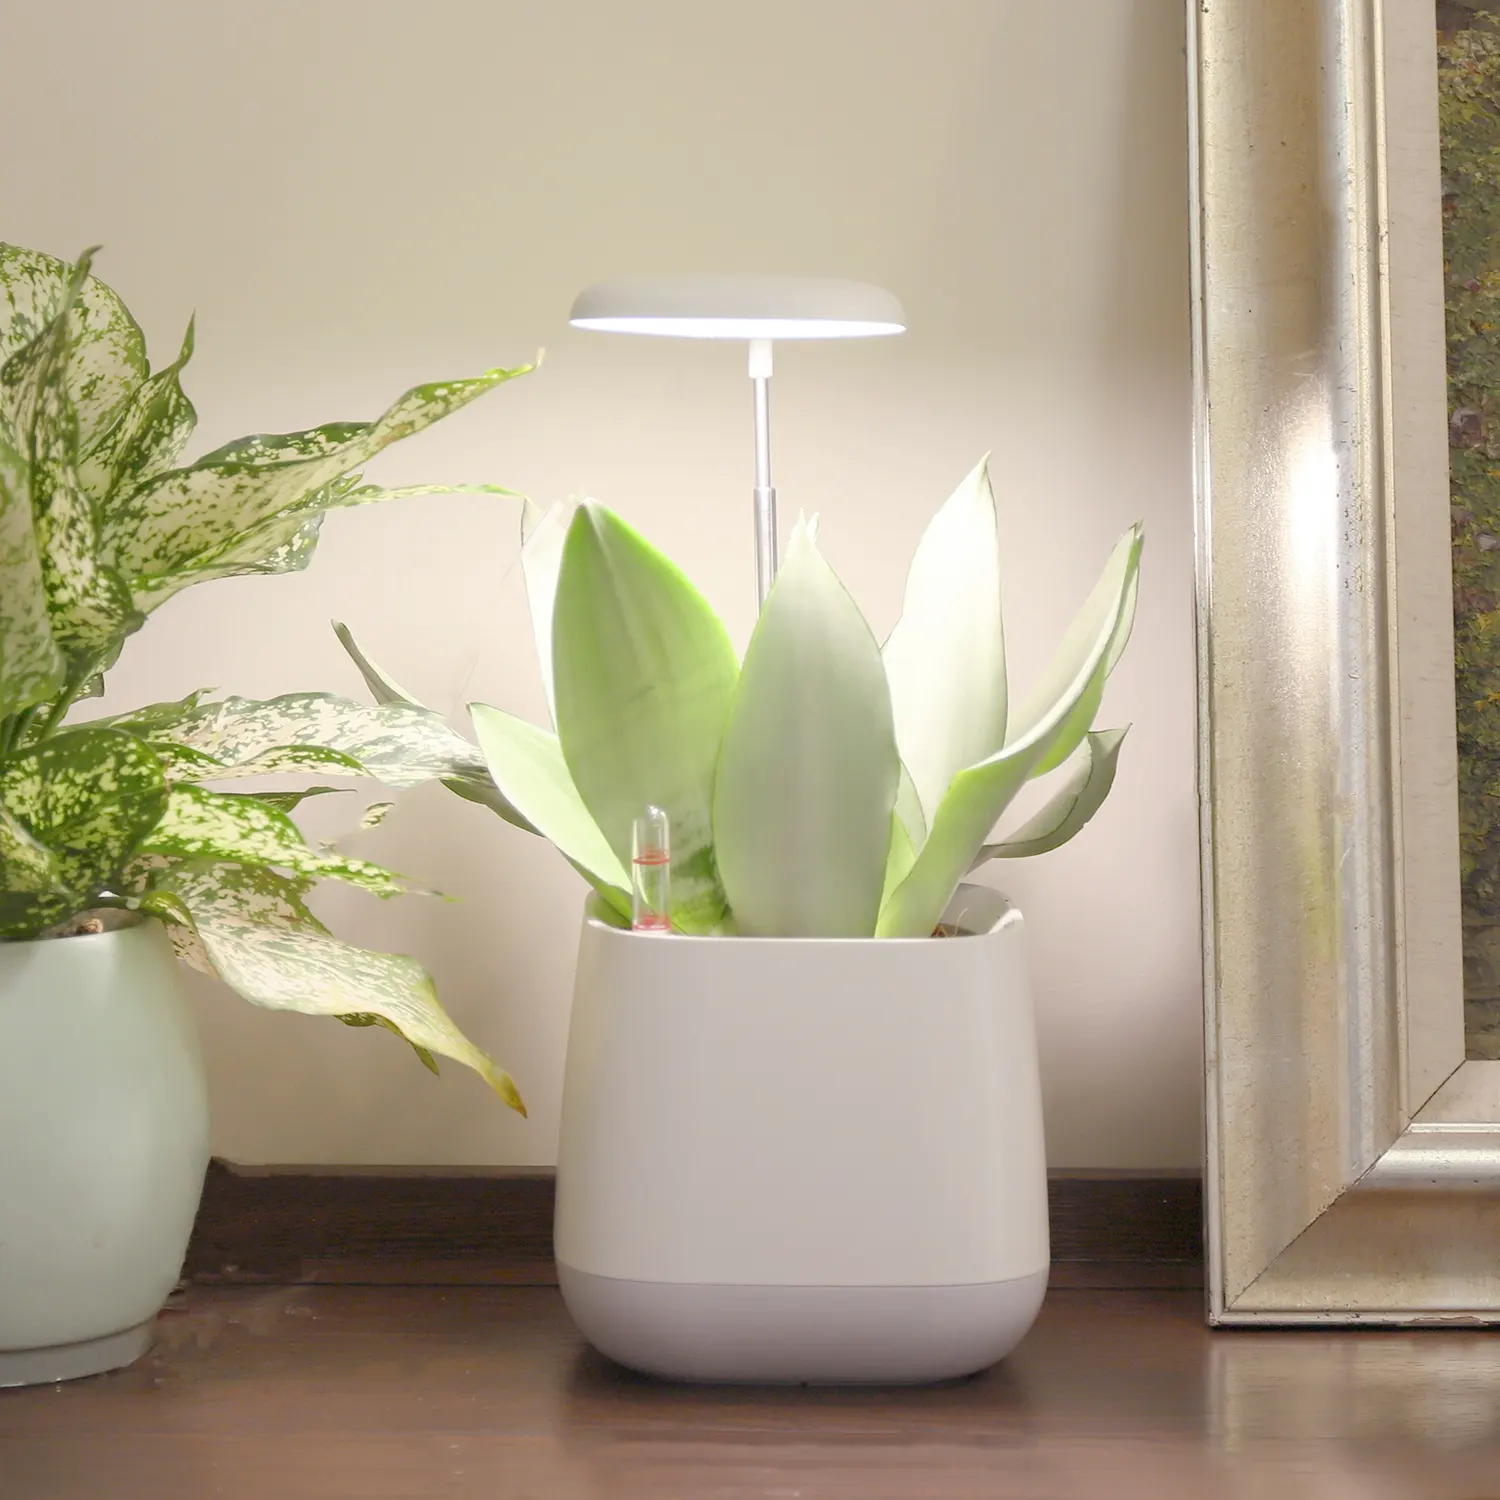 J & C 10W 다른 모양 클립 성장 빛 식물 빛에 업 그레 이드 전체 스펙트럼 클립 저렴한 탁상 흰색 실내 식물 성장 램프